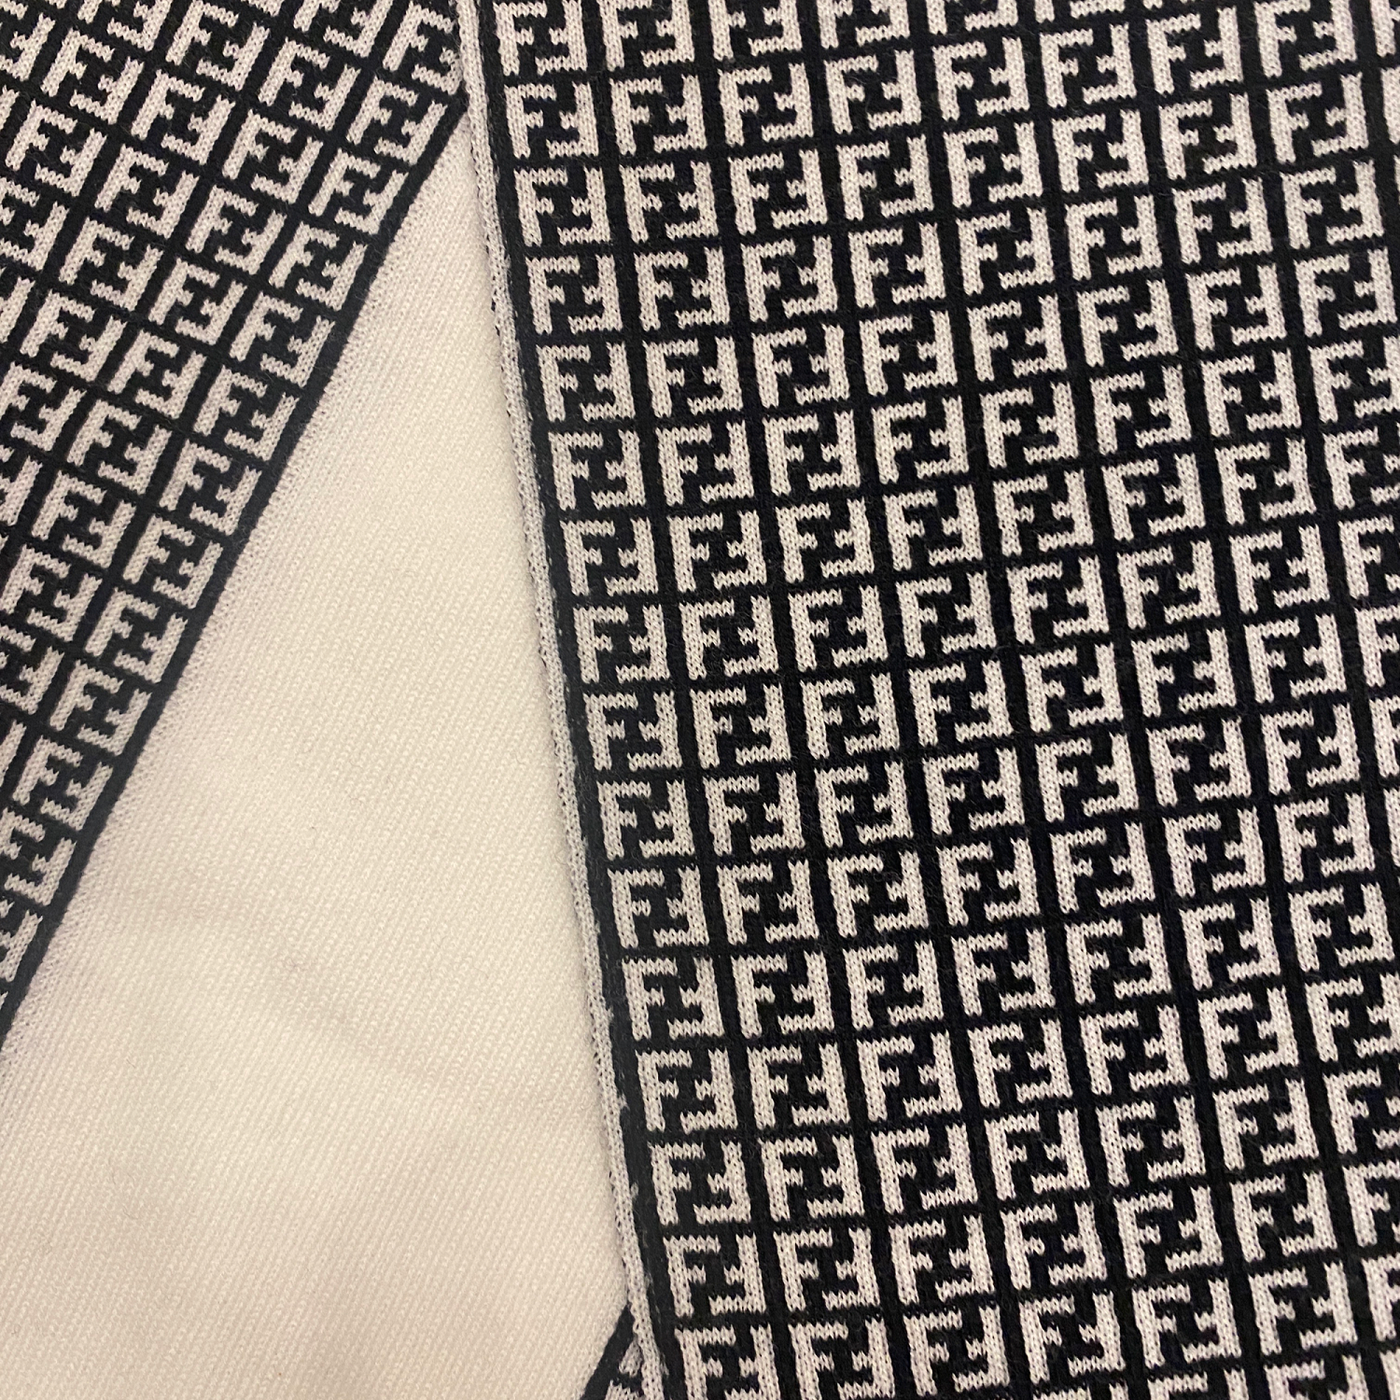 Fendi FF Print Nero and Bianco Knitted Wool Scarf - LUXURYMRKT